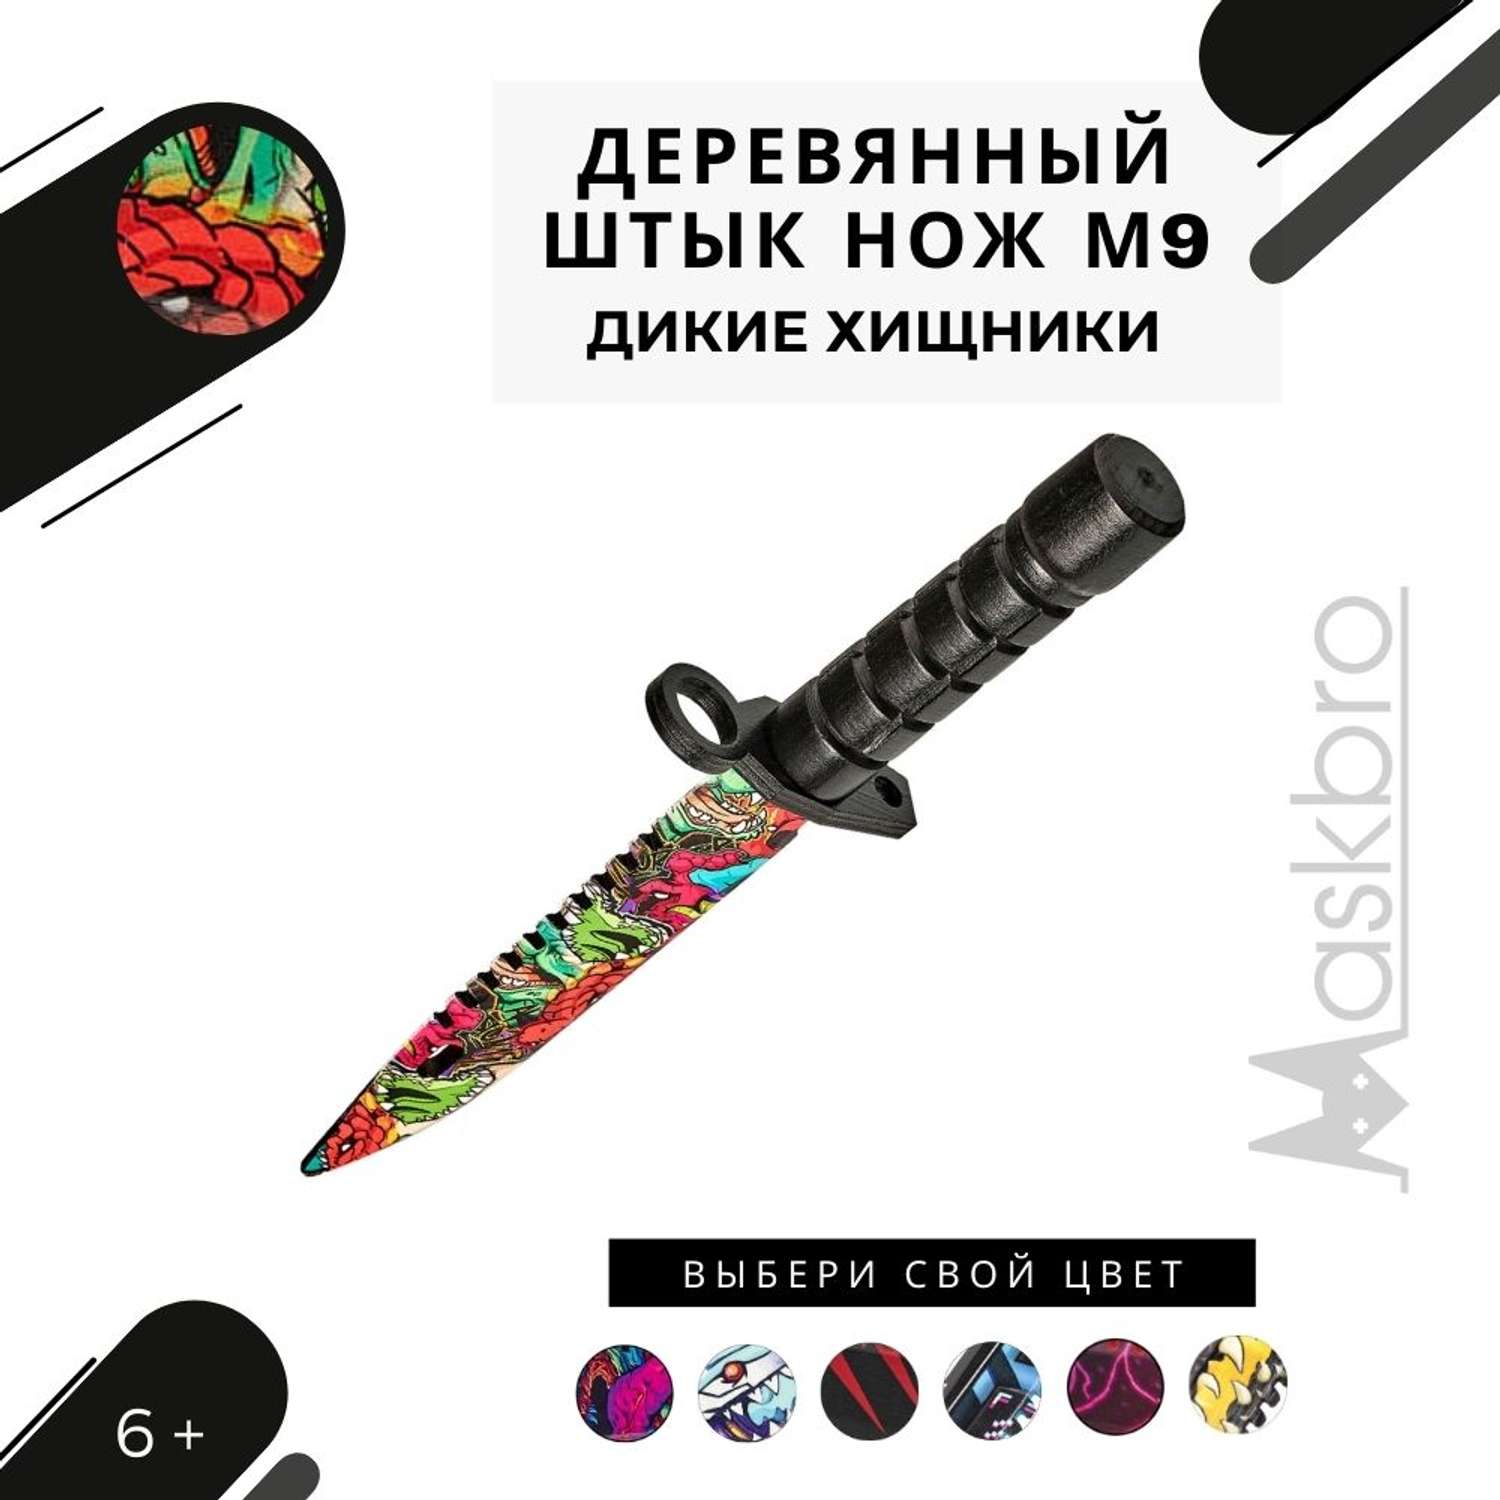 Штык-нож MASKBRO Байонет М-9 Feral Predator-Дикие Хищники деревянный - фото 1